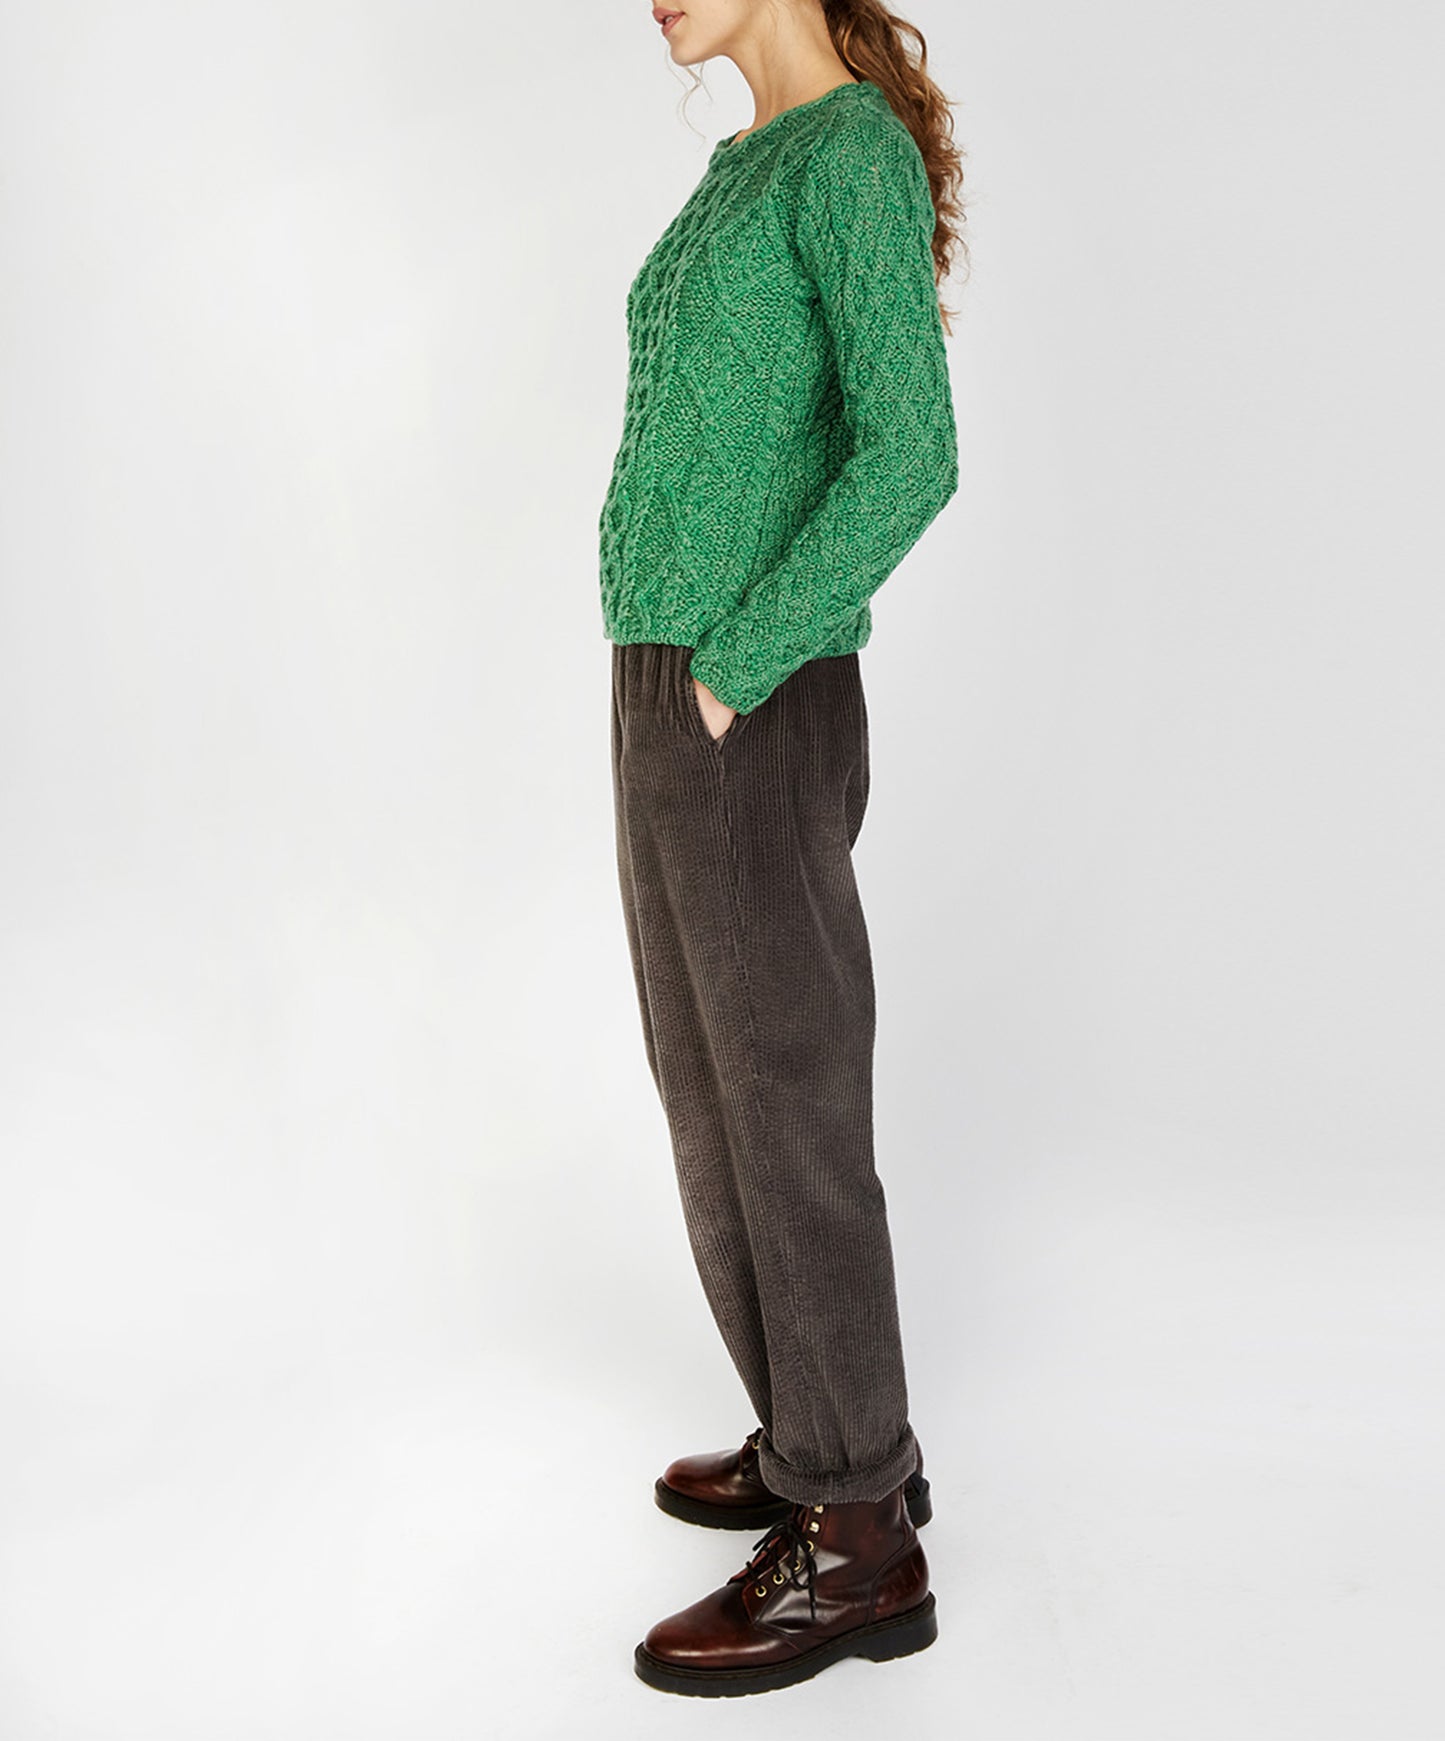 IrelandsEye Knitwear Lambay Lattice Cable Aran Sweater Green Marl